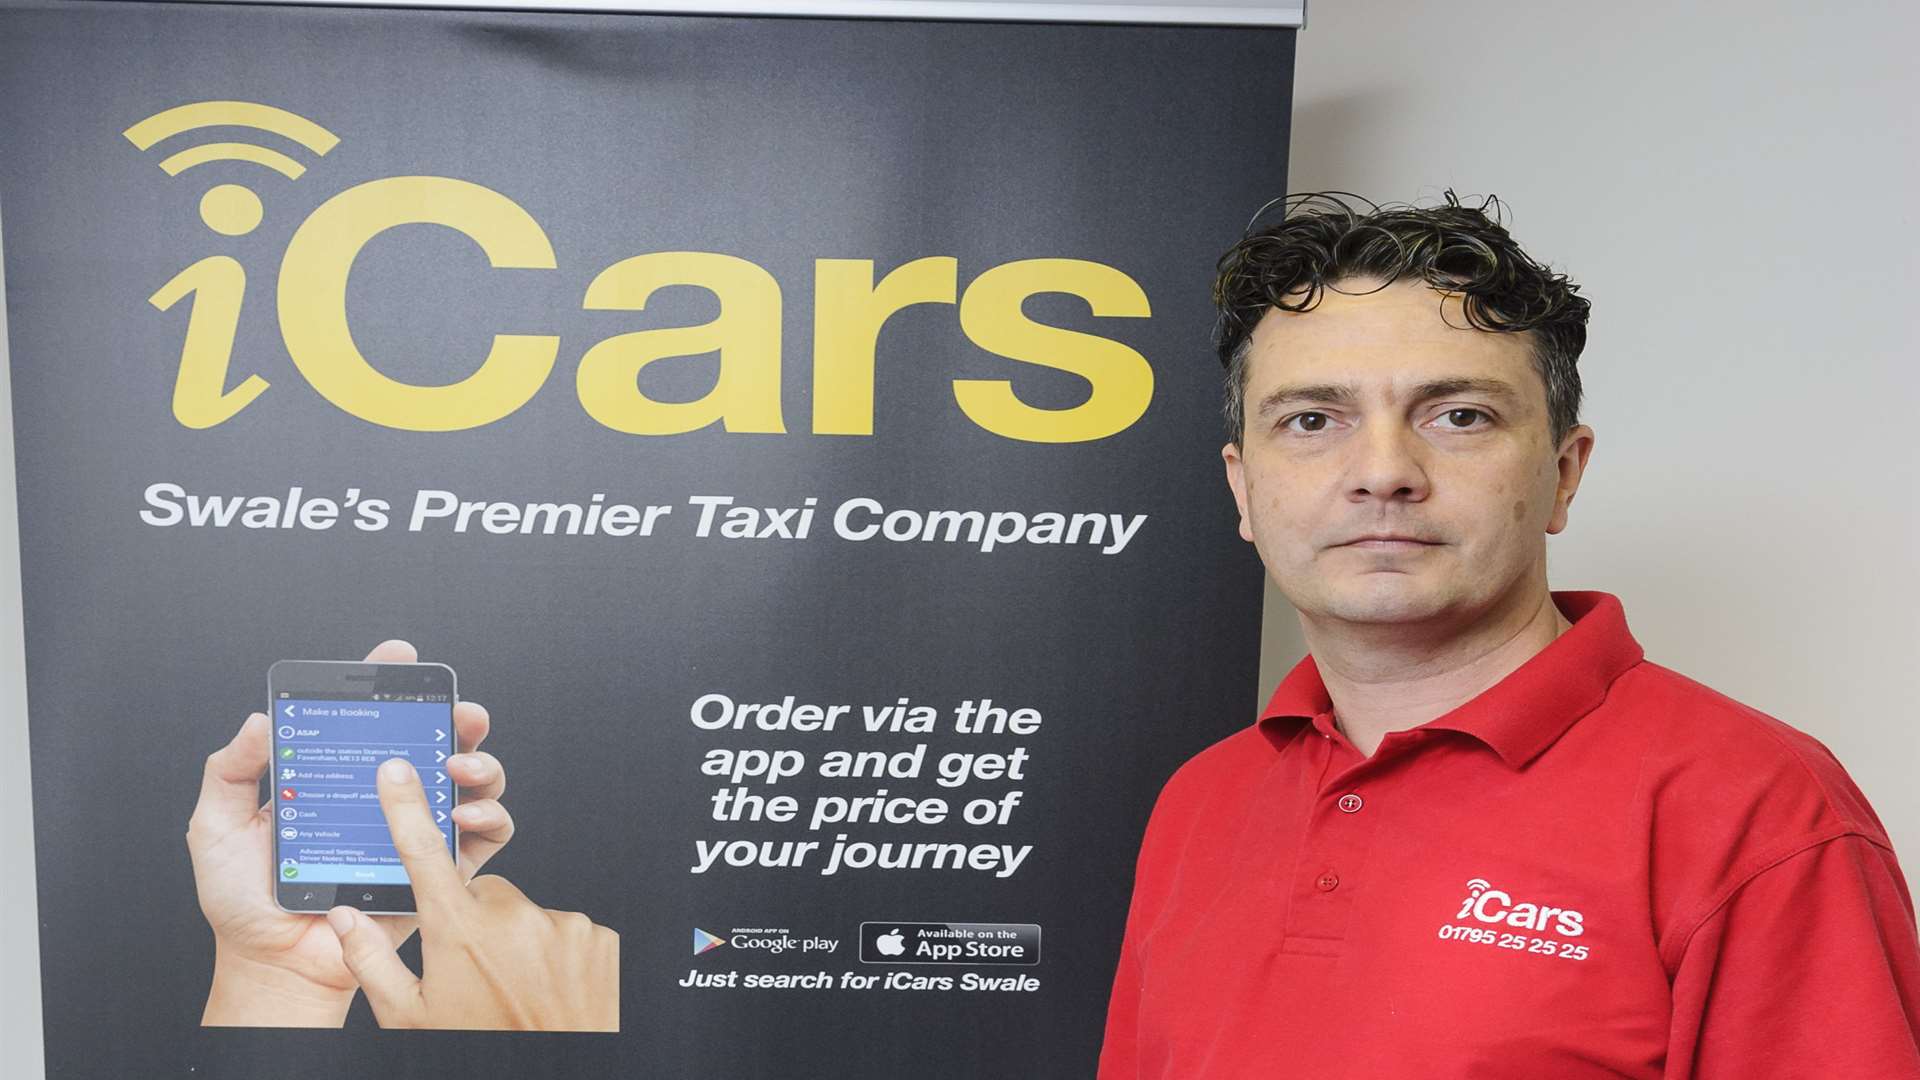 Tony Stevens, of taxi business iCars, Argent Road, Rushenden